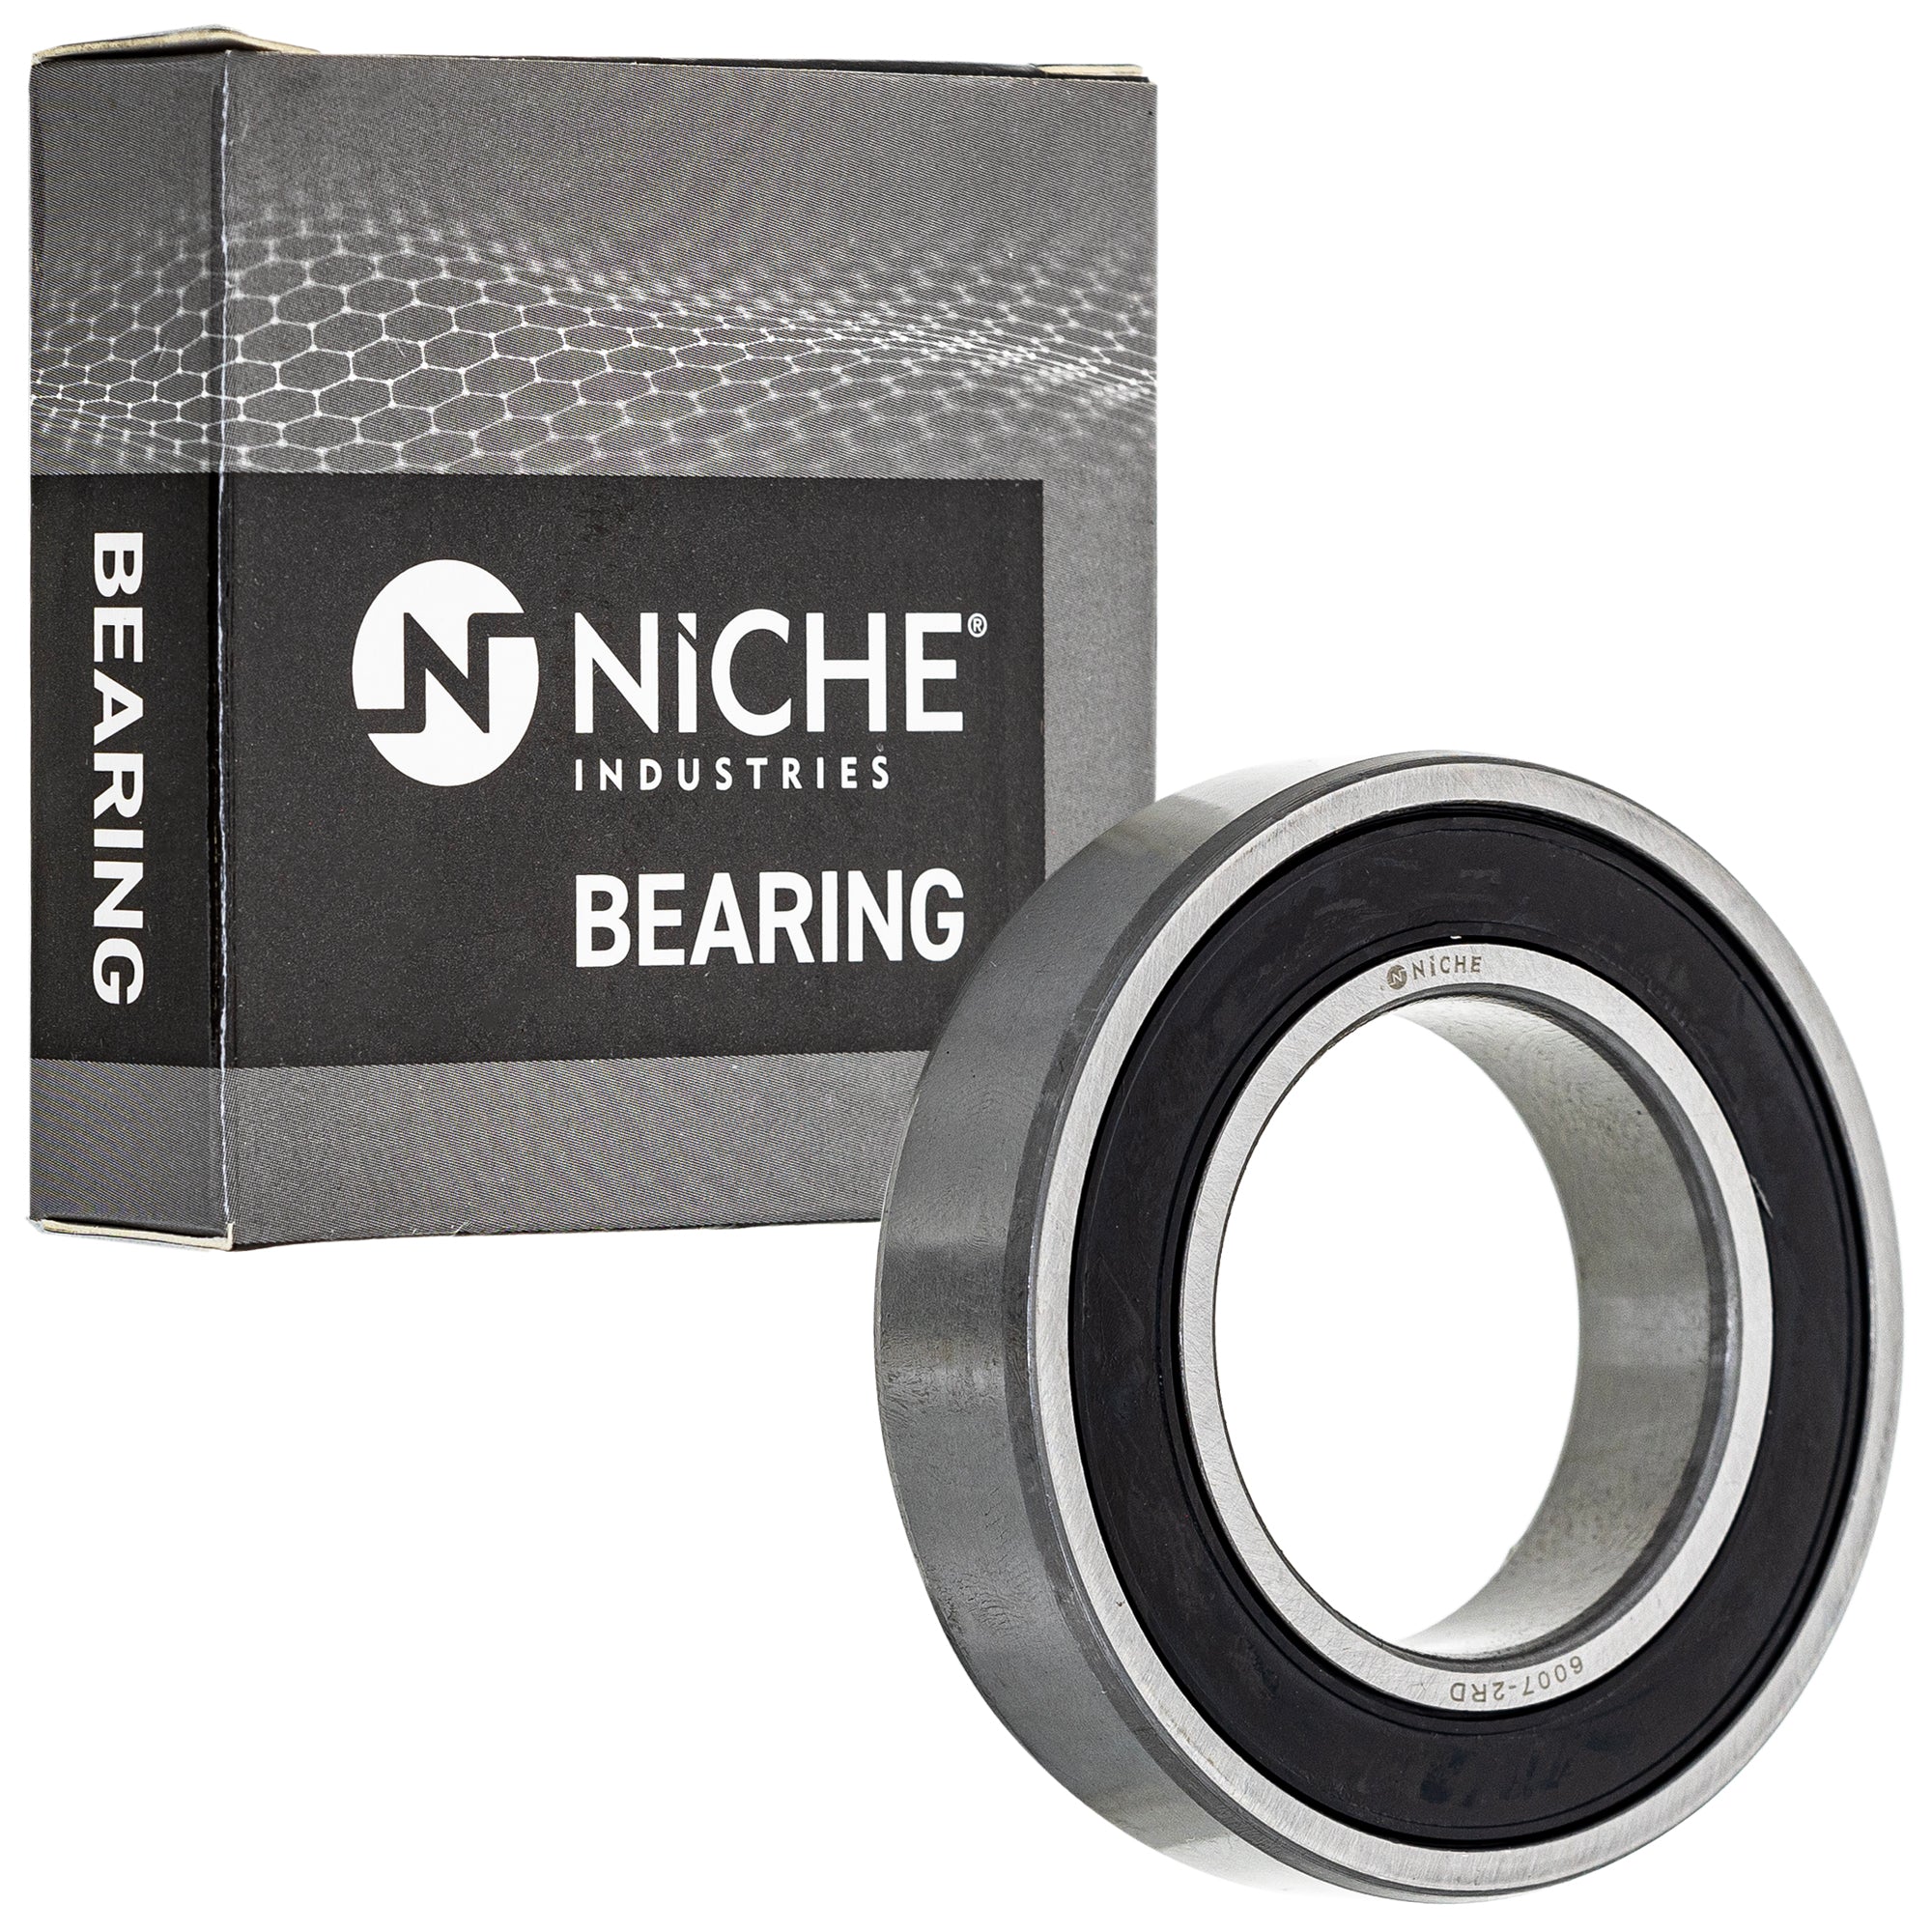 NICHE 519-CBB2274R Bearing 2-Pack for zOTHER XR650R TRX450 TRX400